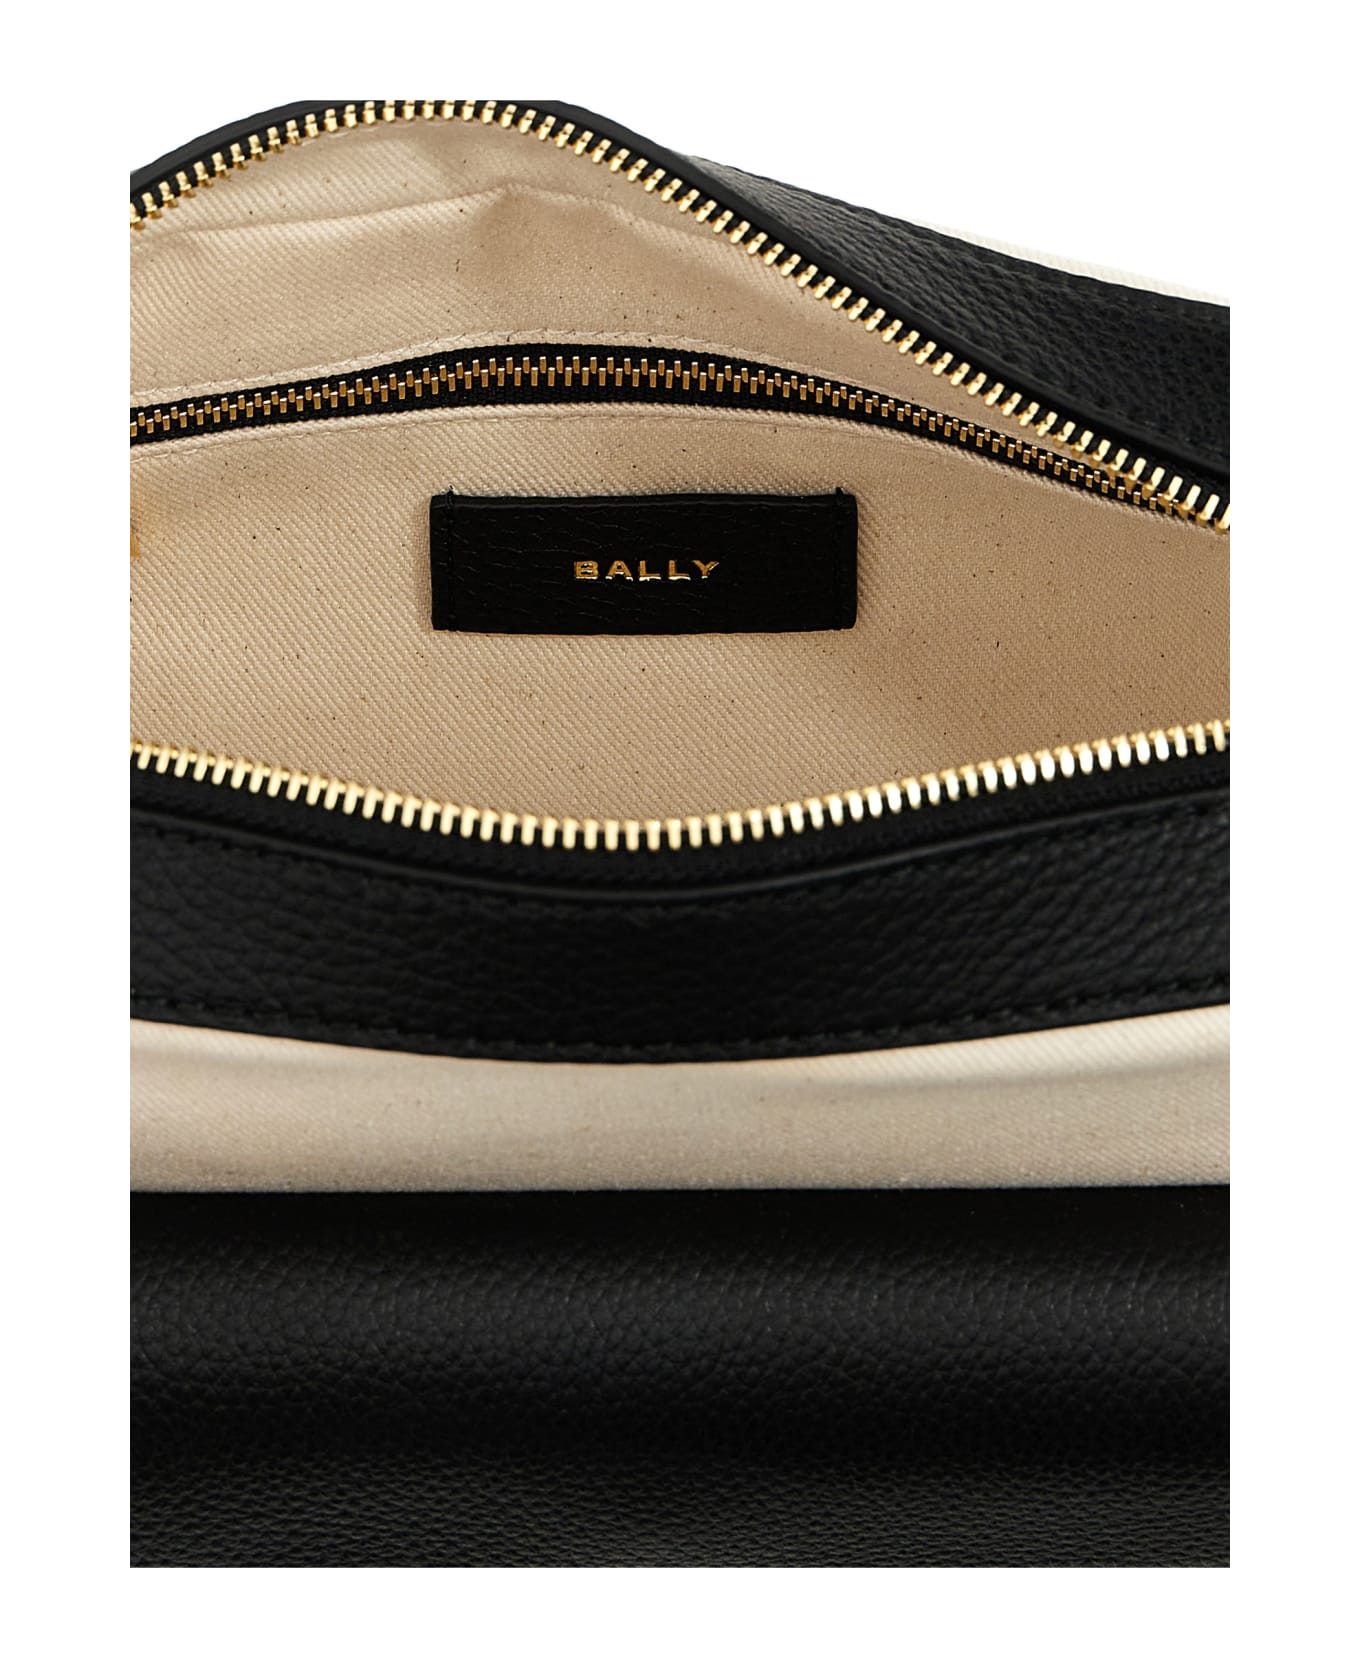 Bally 'bar Daniel' Crossbody Bag - White/Black